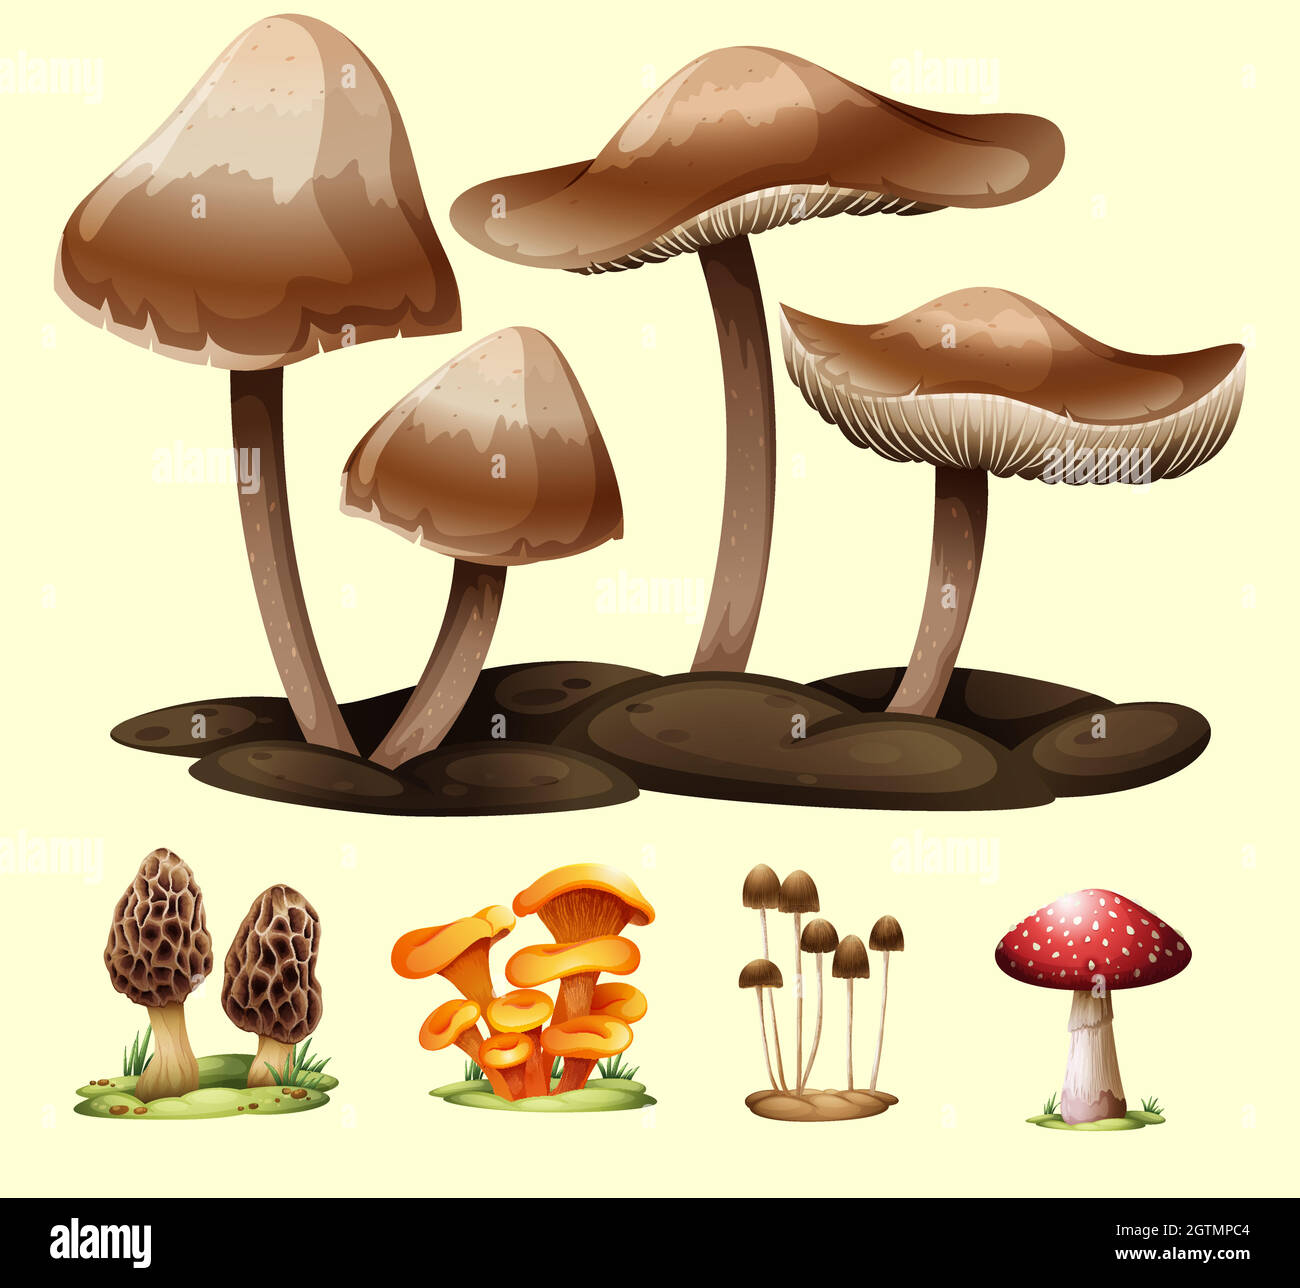 Verschiedene Arten von Pilzen Stock Vektor